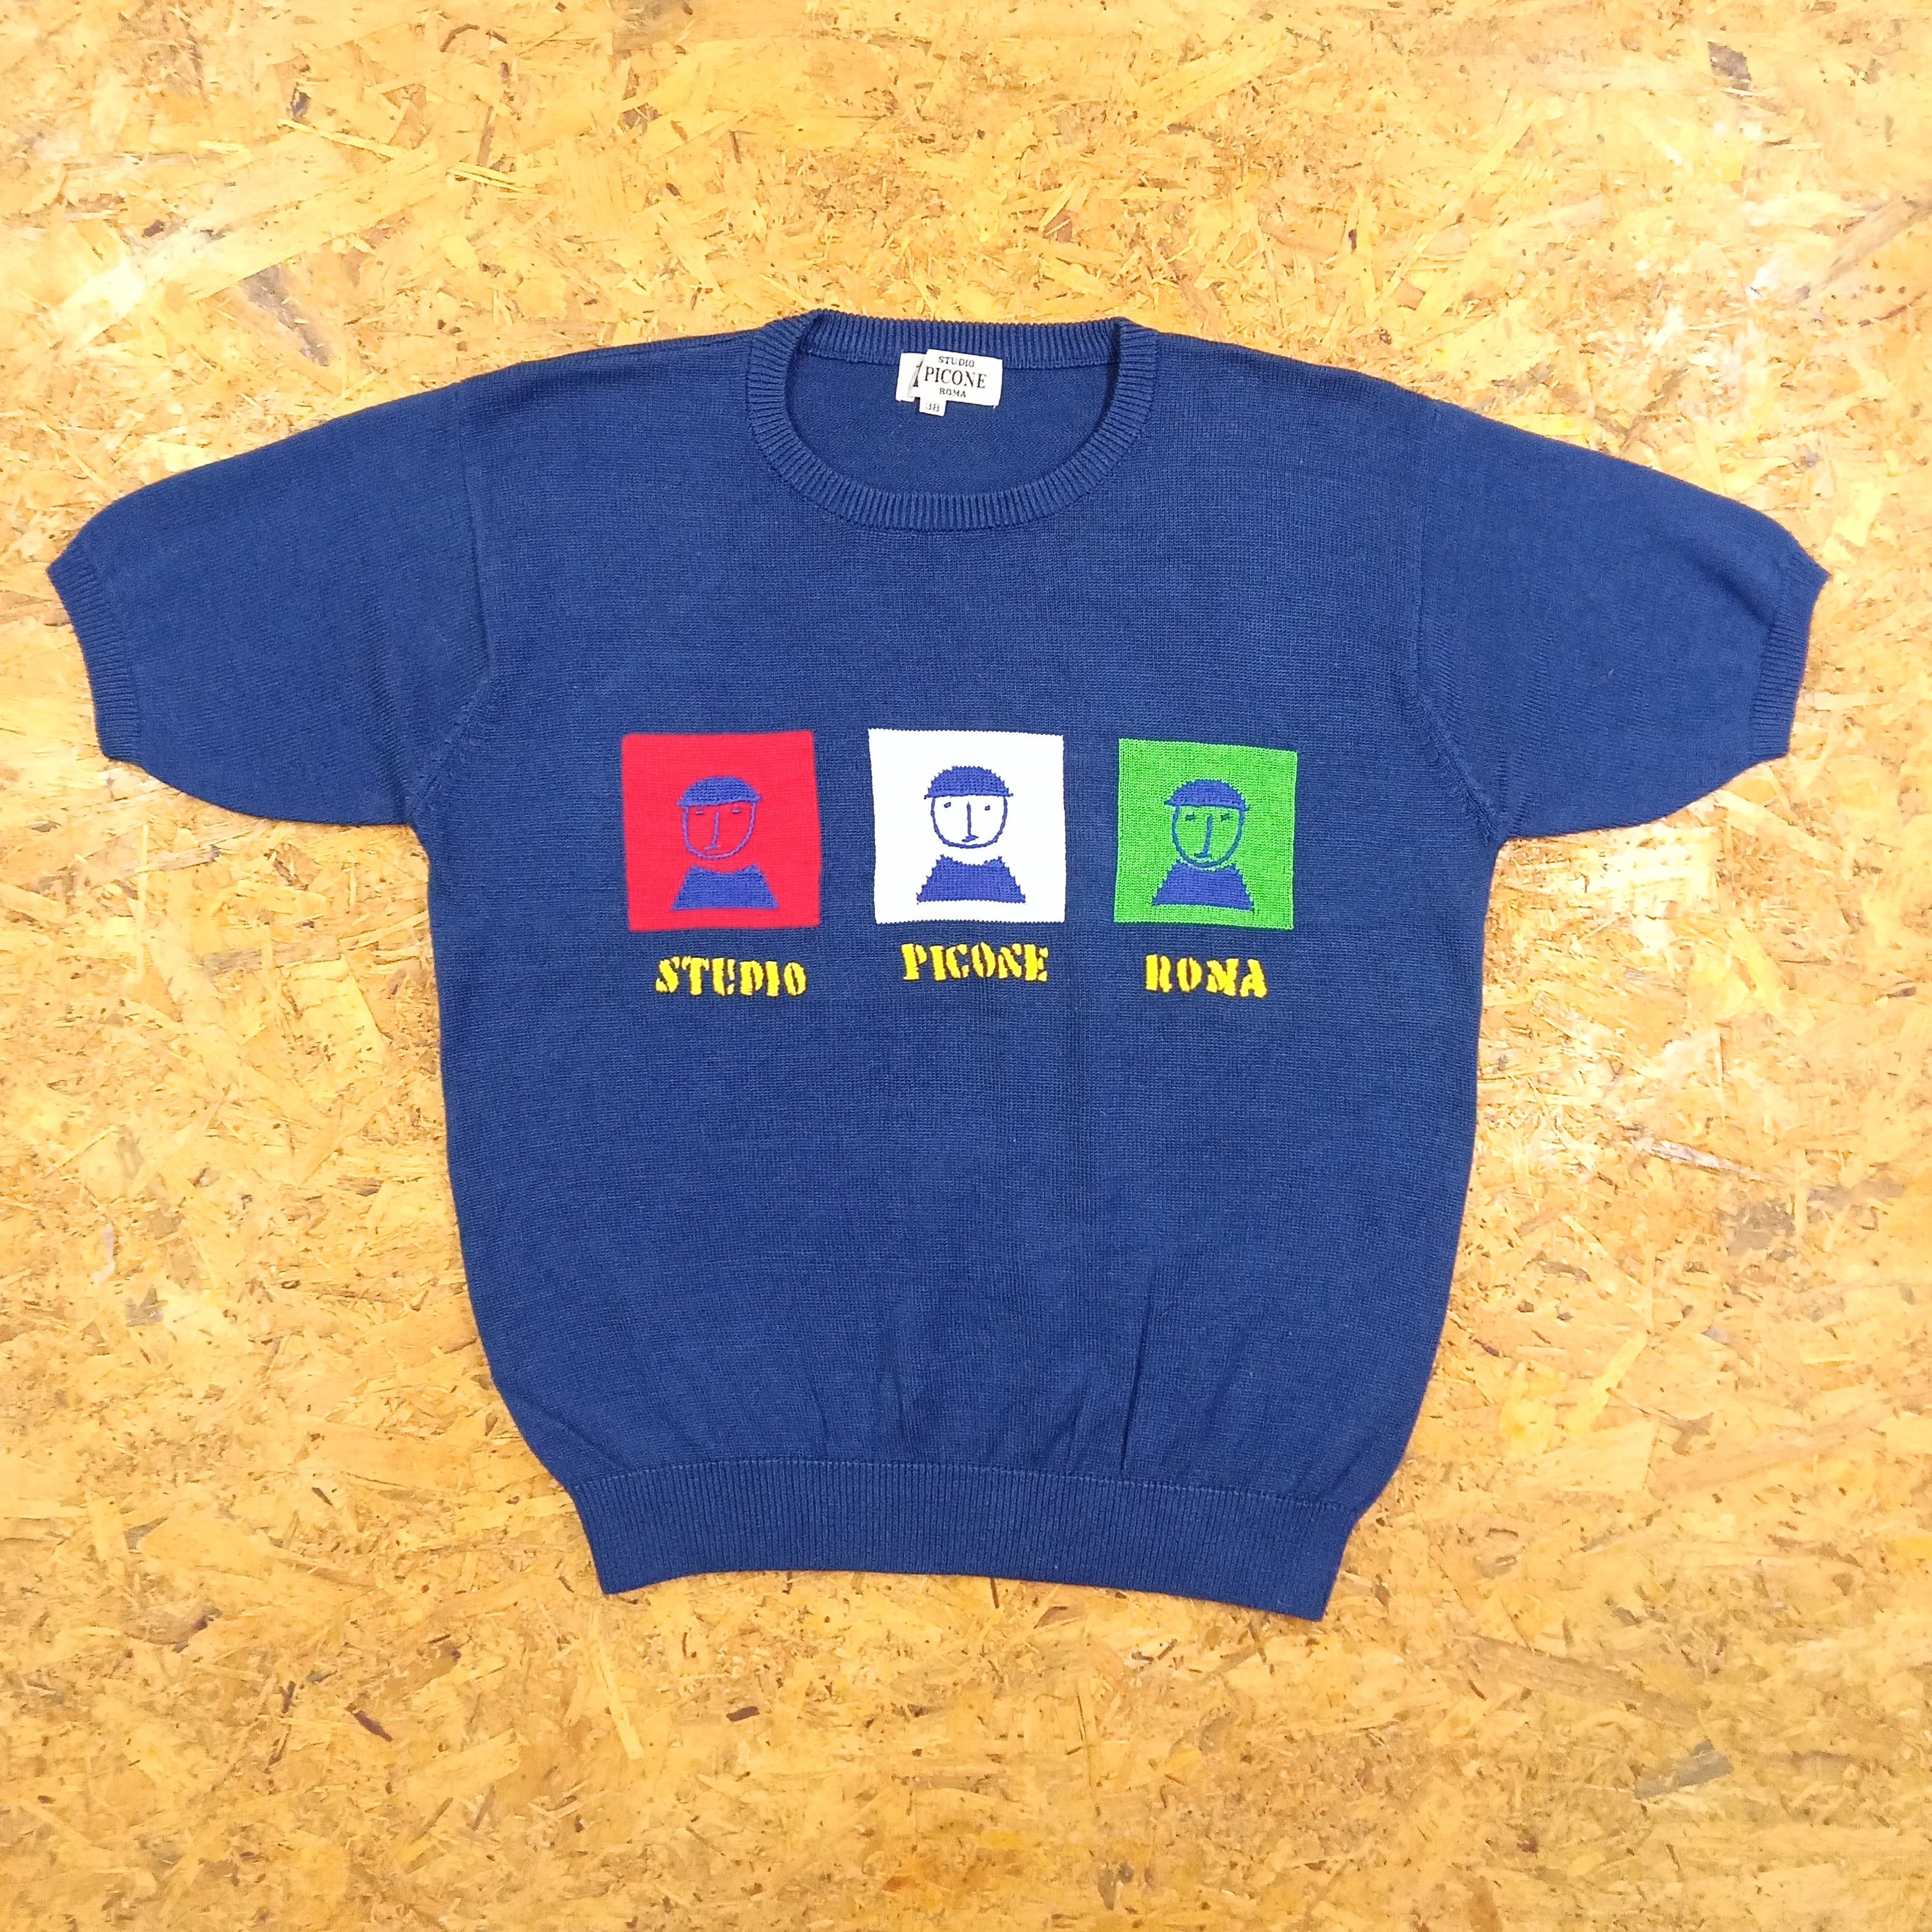 Homespun Knitwear Studio Picone Roma Japan Knitted Tshirt | Grailed